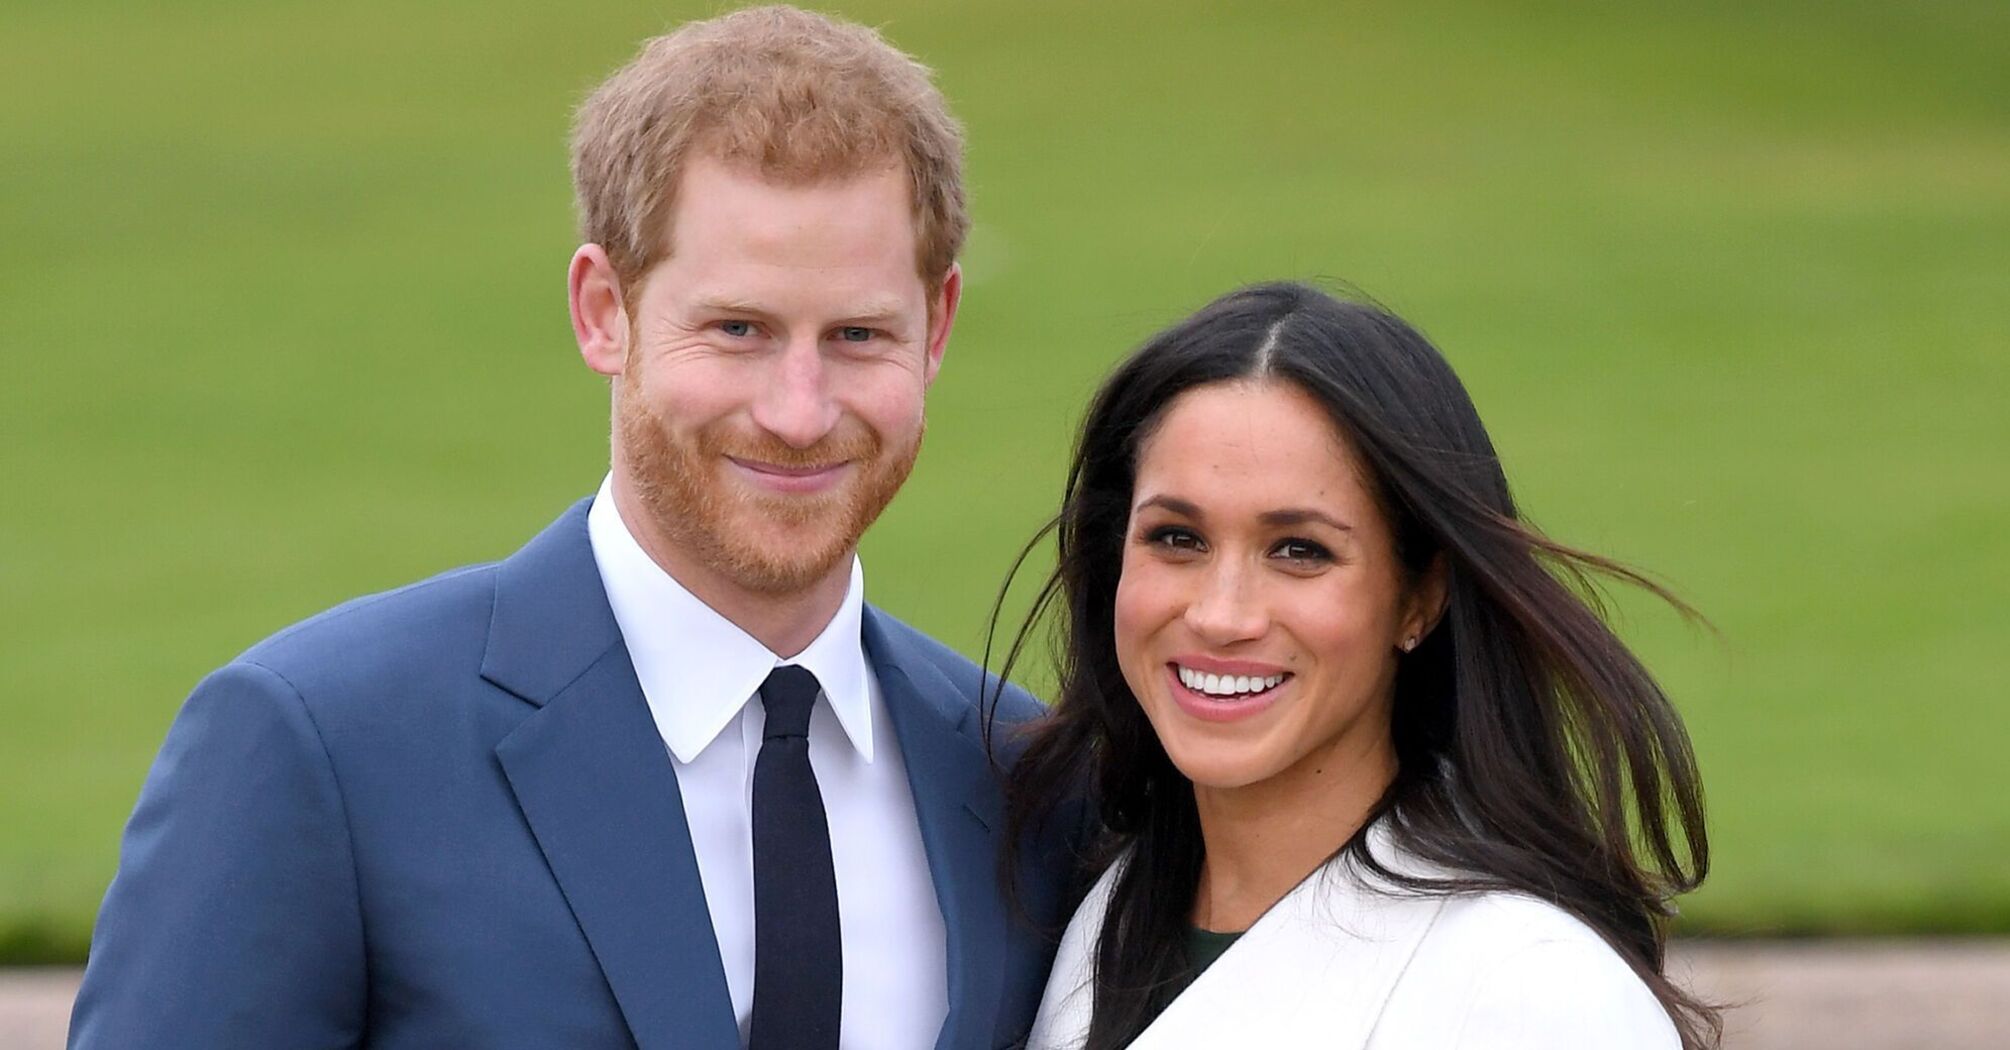 Royal photographer calls Prince Harry and Meghan Markle's wedding a 'disaster'